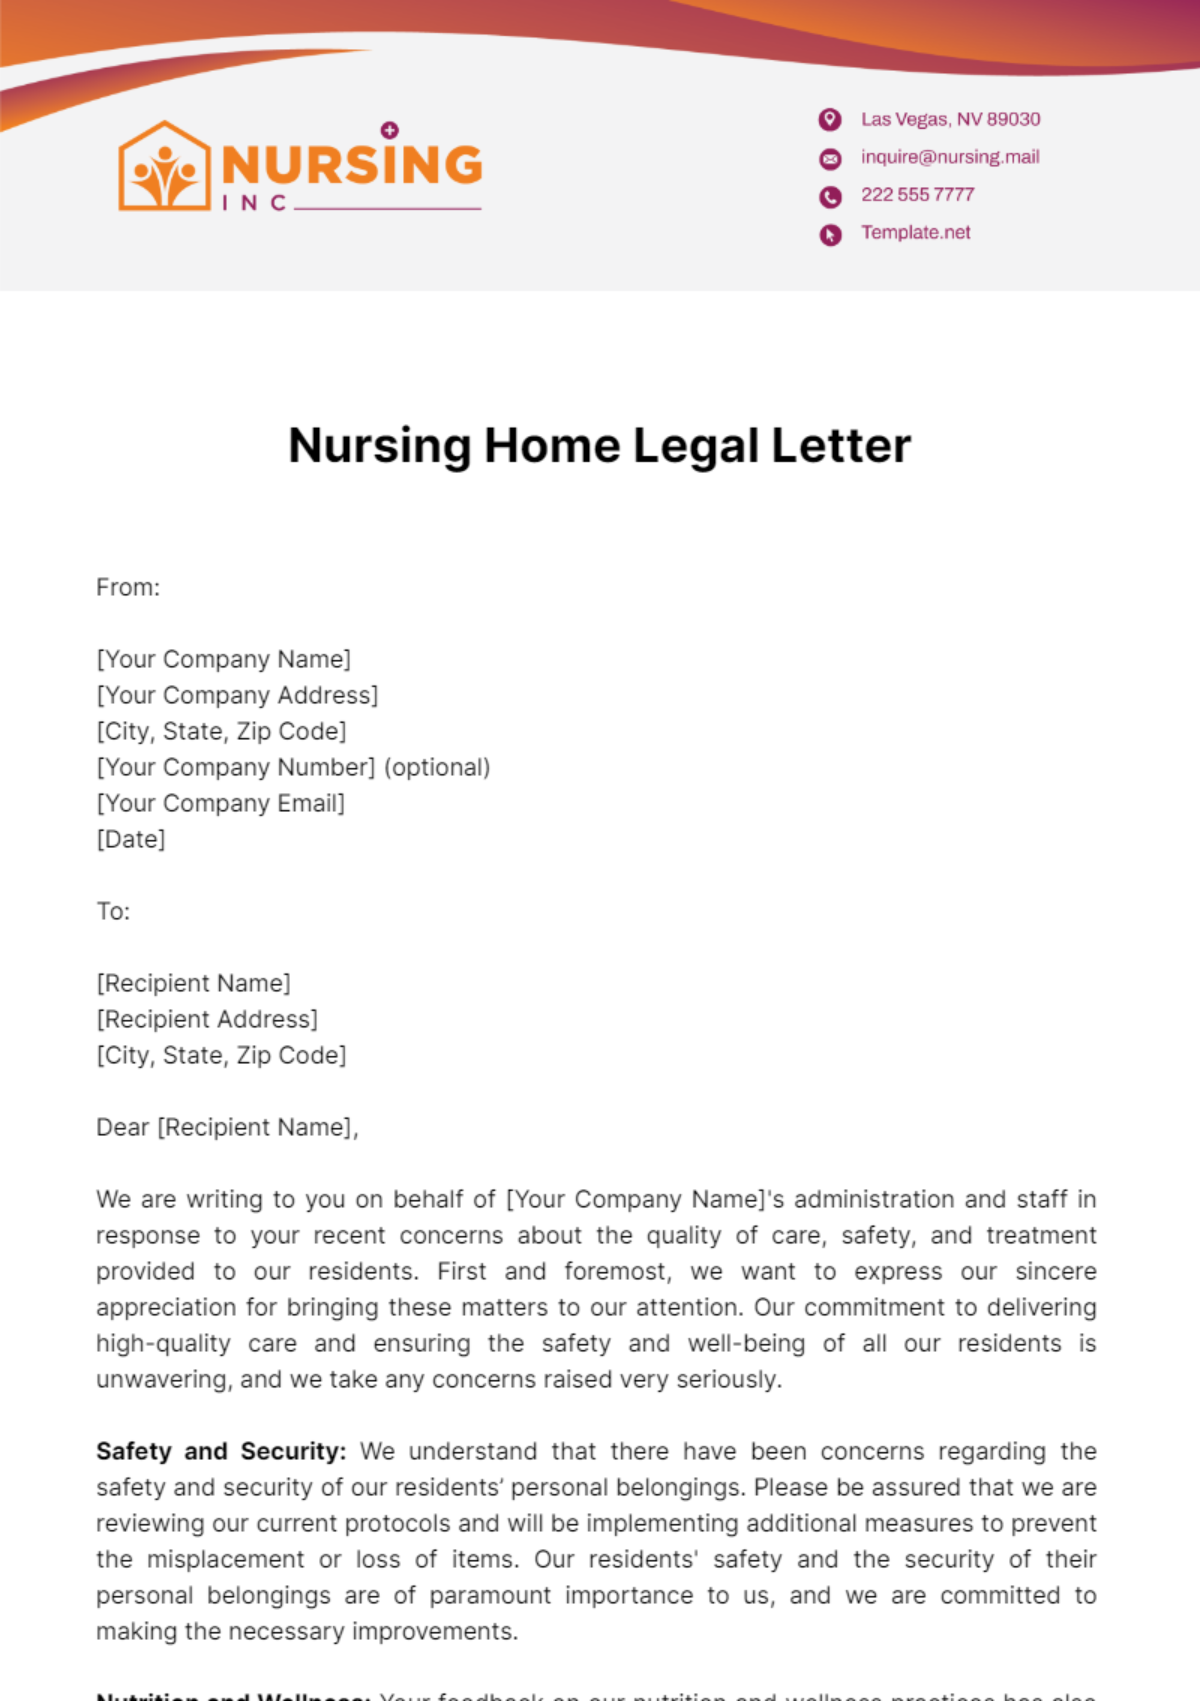 Nursing Home Legal Letter Template